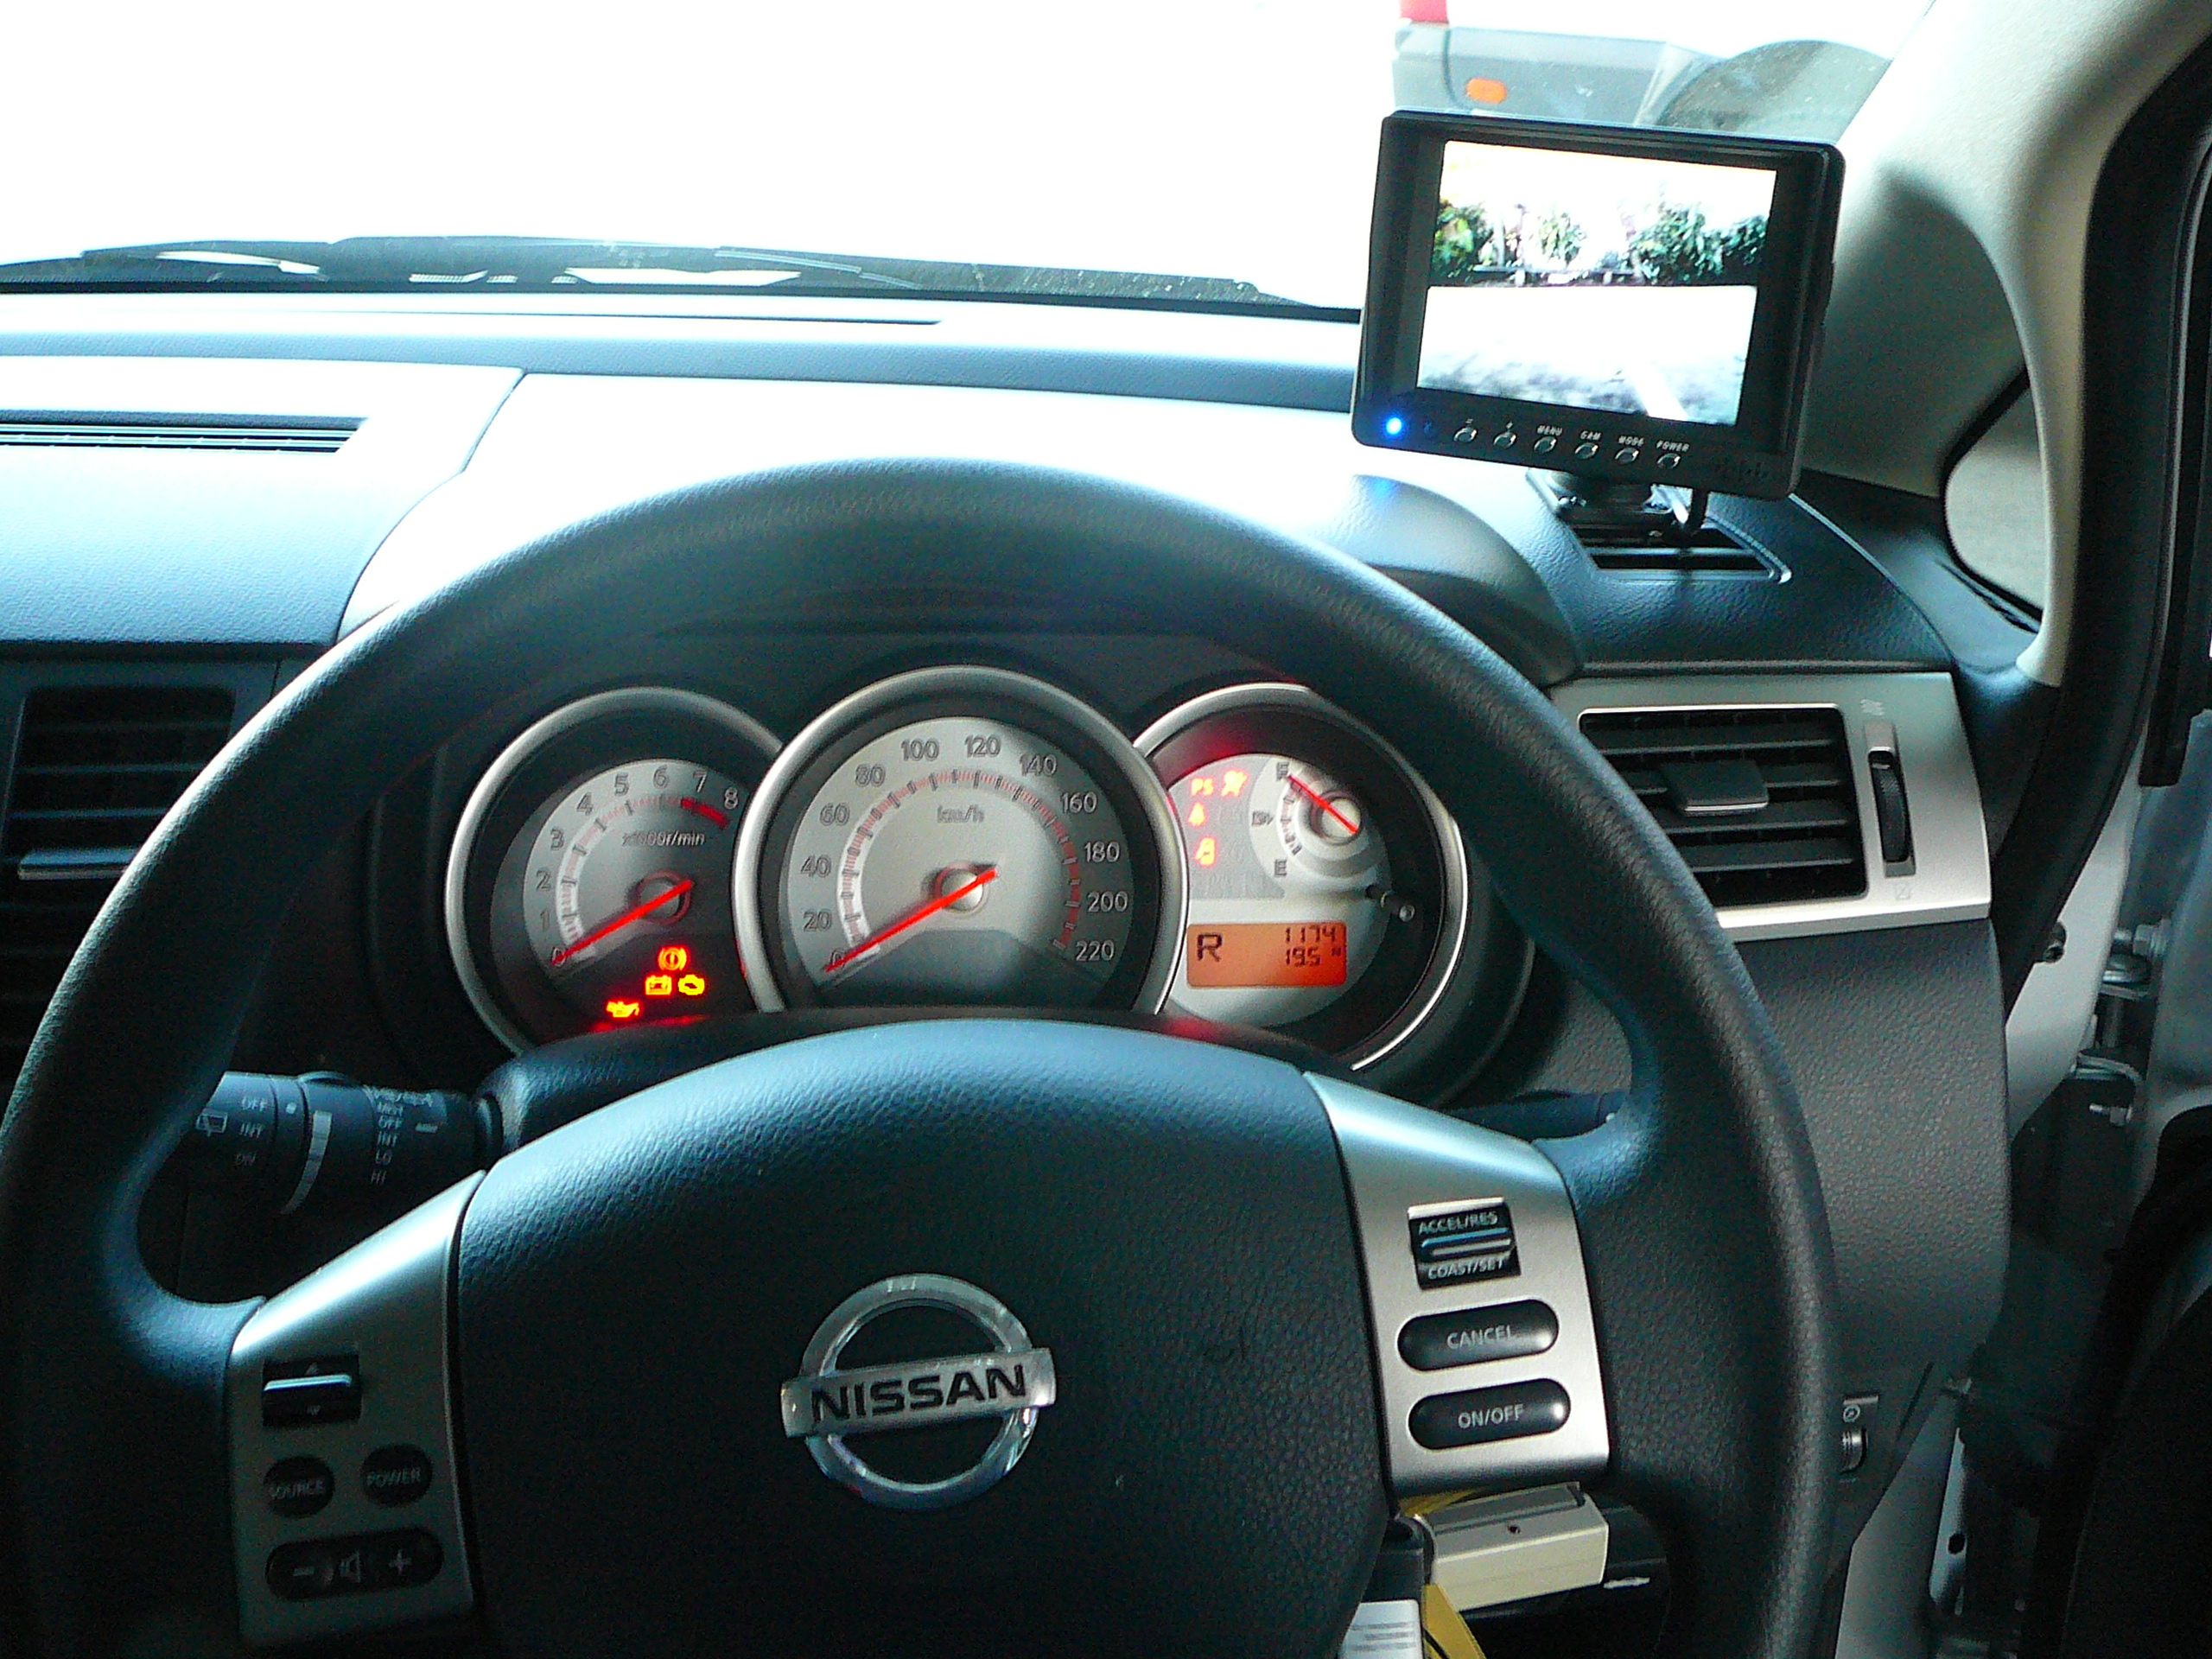 Nissan Tiida, 5 inch monitor and Reverse Camera